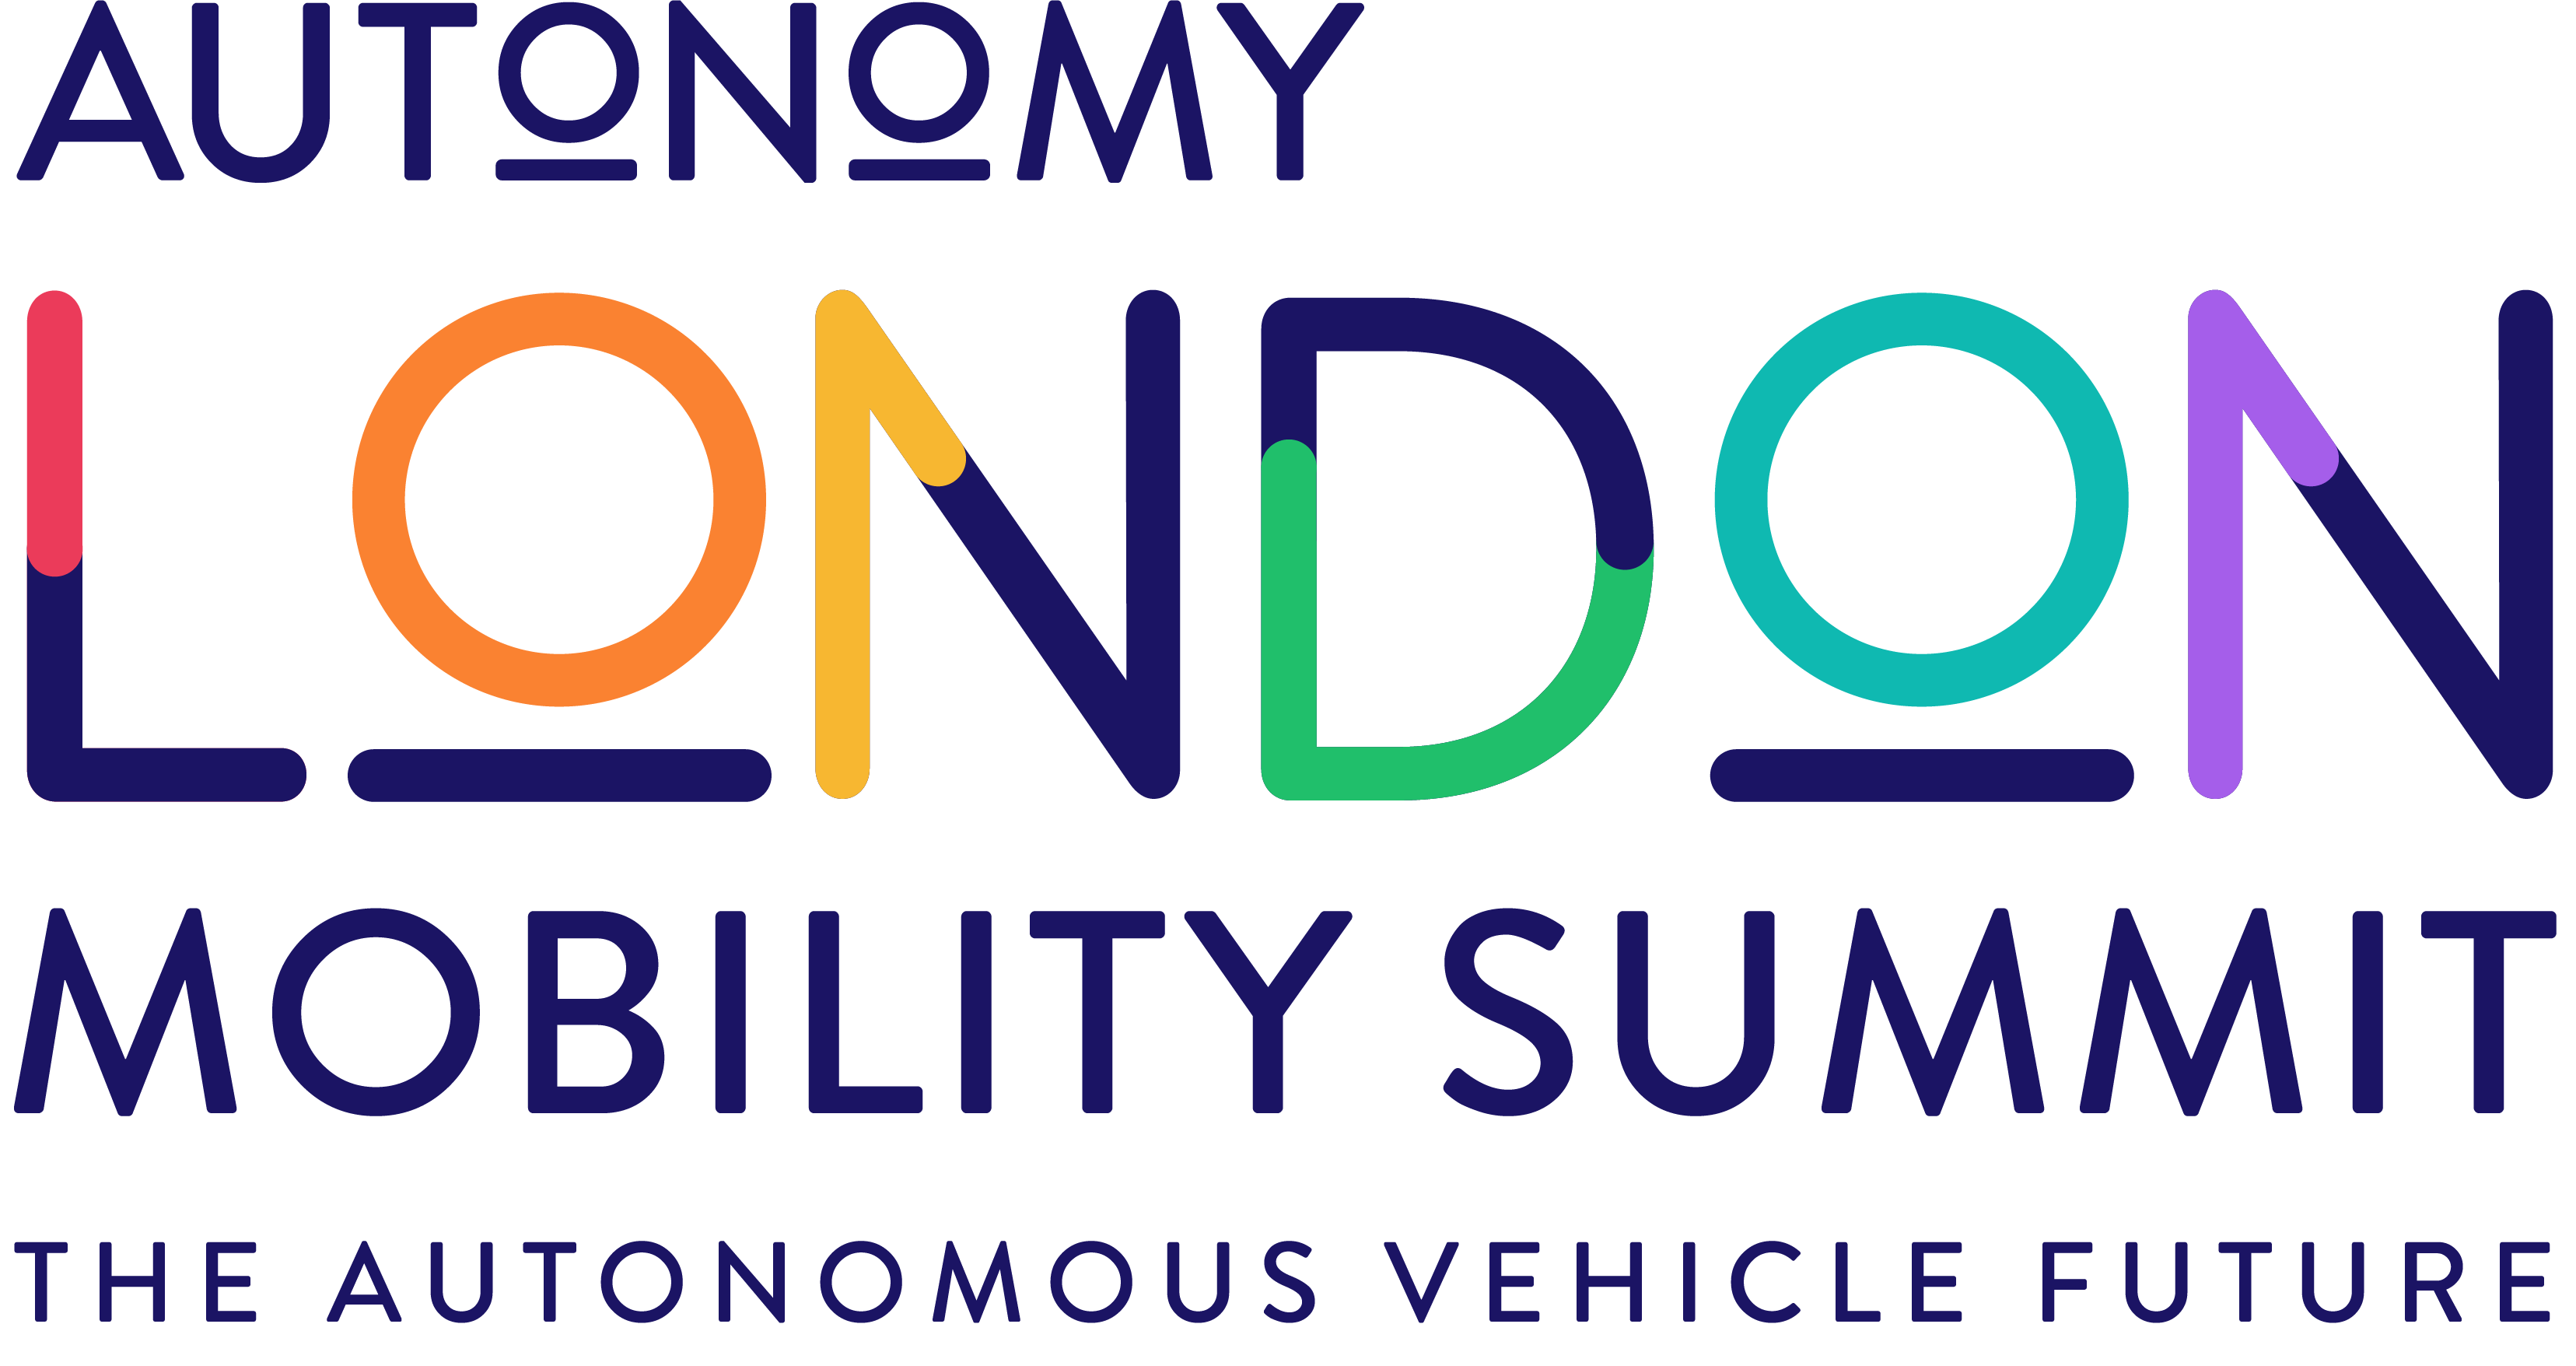 Mobility Summit London